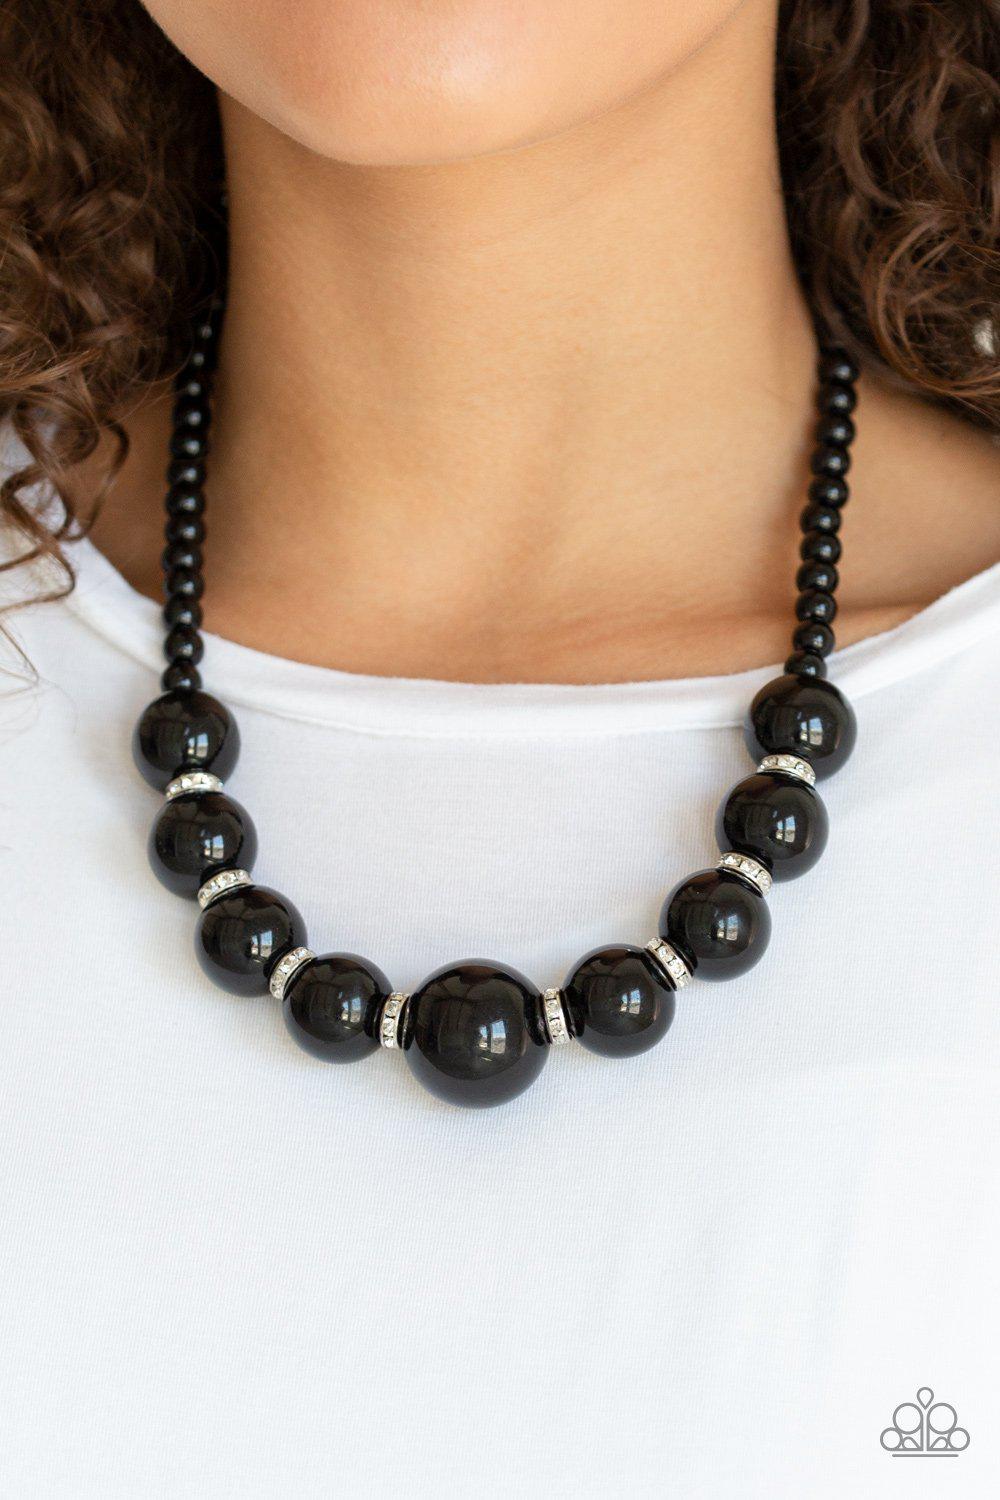 SoHo Socialite Black Necklace - Paparazzi Accessories - model -CarasShop.com - $5 Jewelry by Cara Jewels